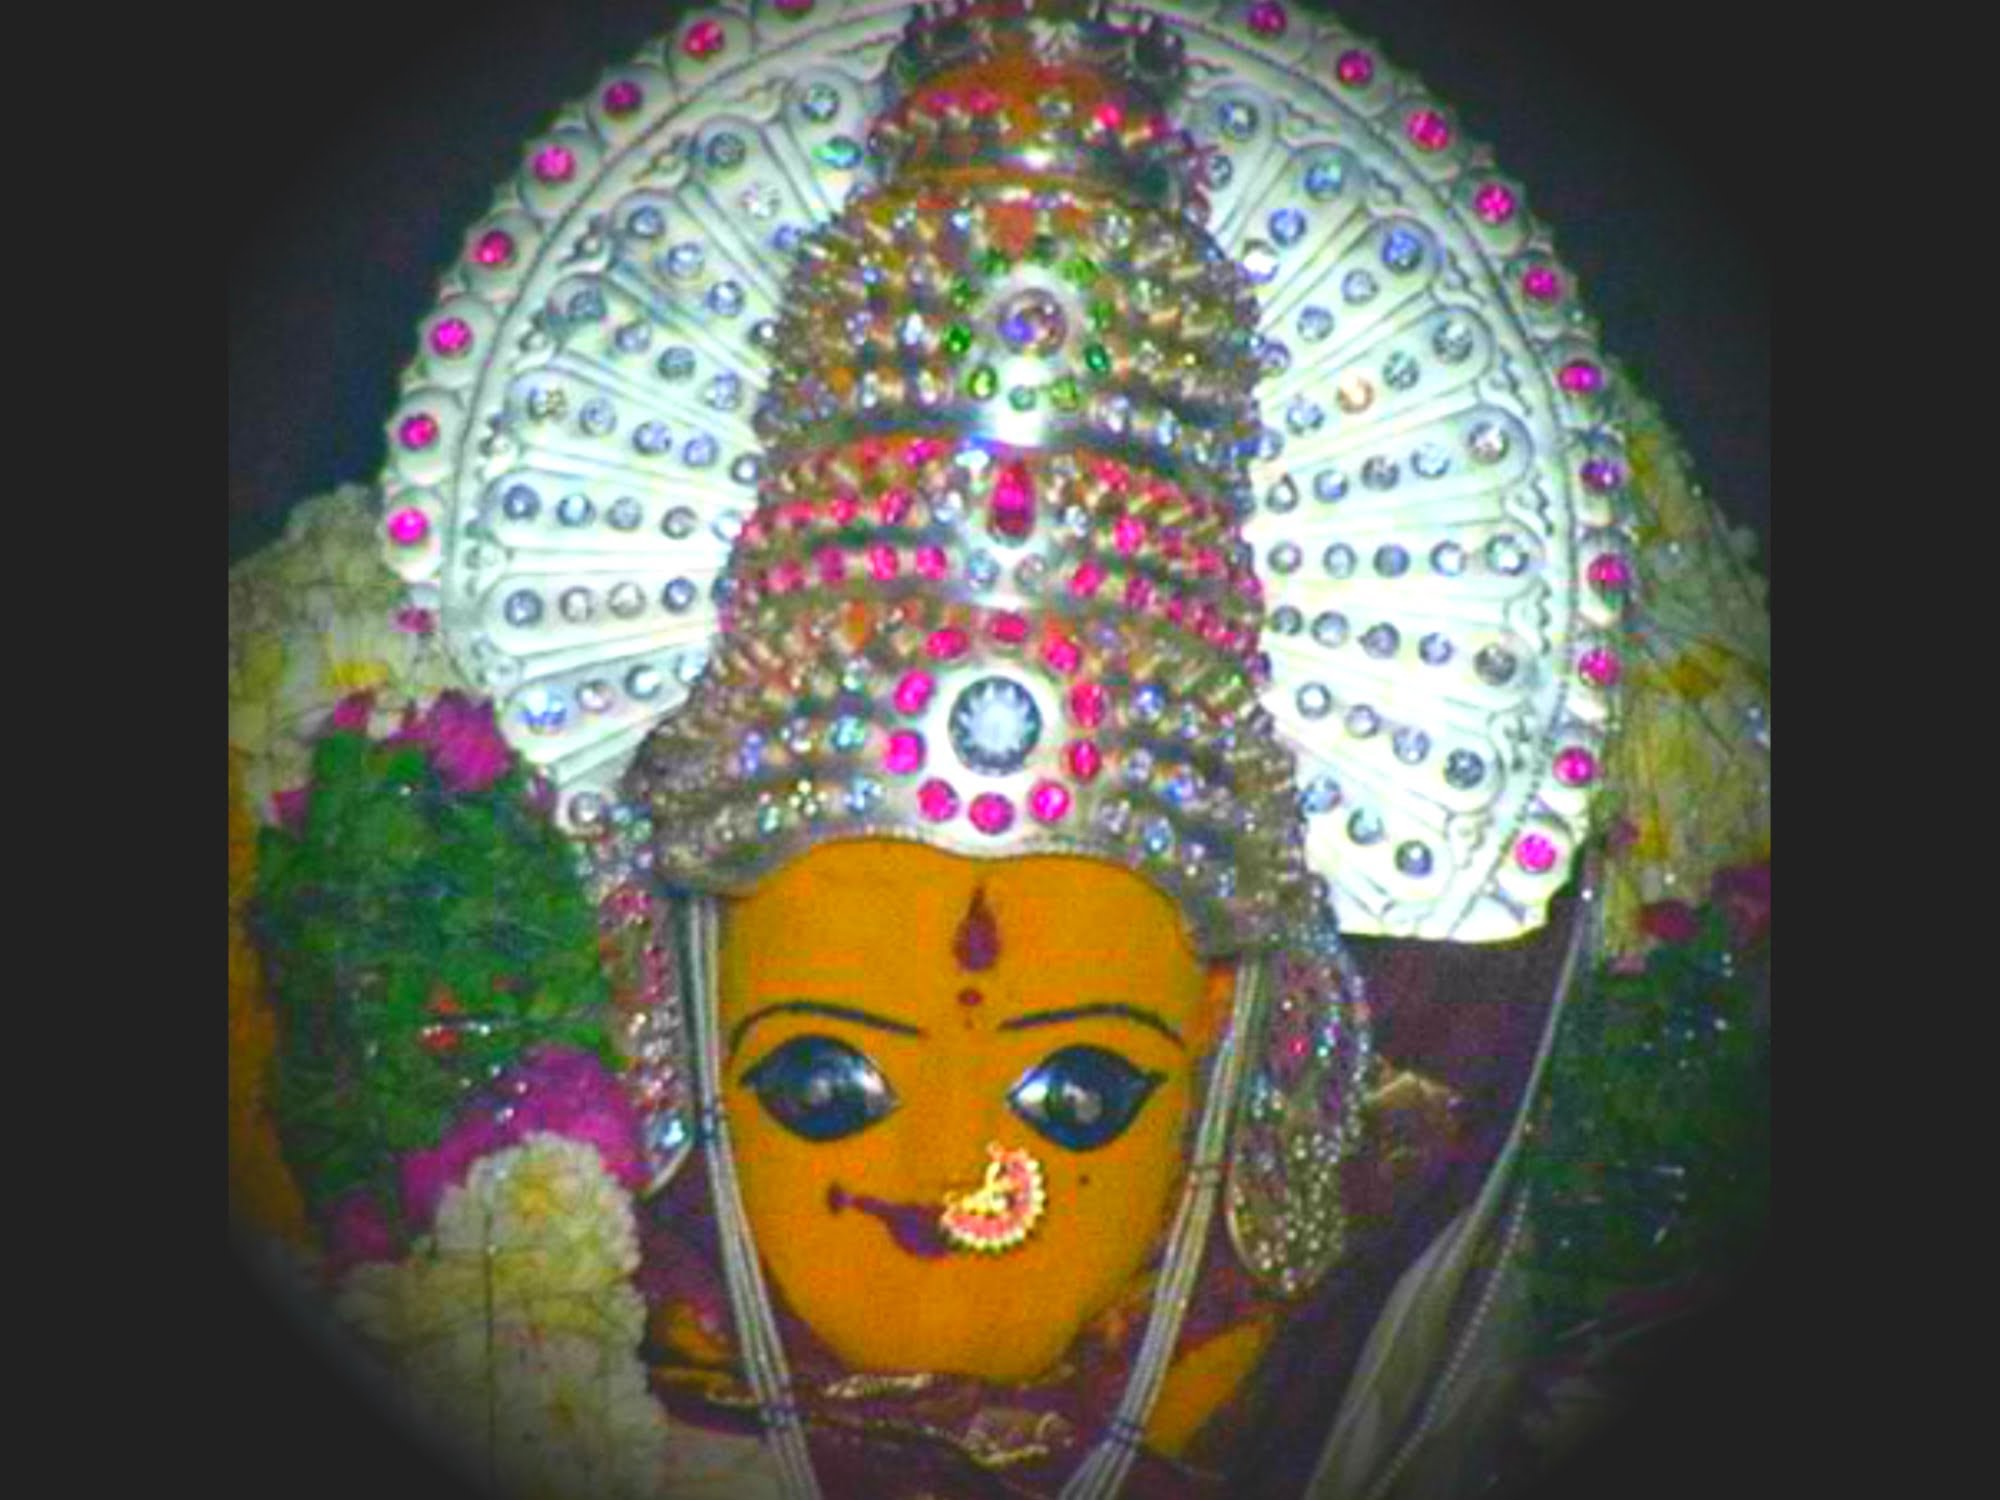 Basara Gnanasaraswathi Temple-Adilabad, AndhraPradesh